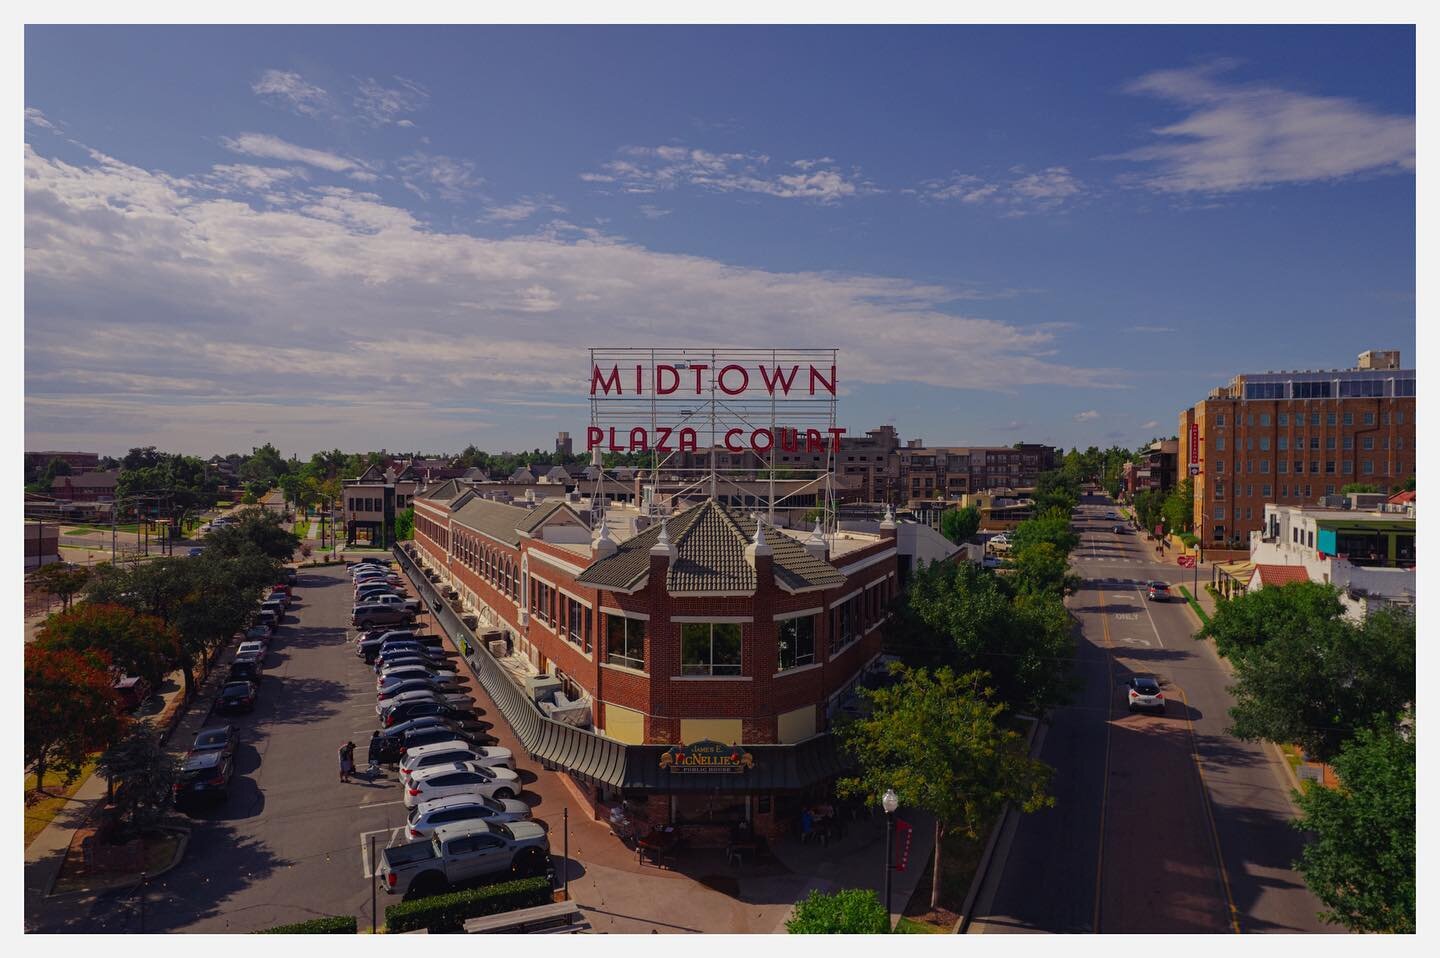 No town like midtown. 

#drone #dronephotography #djiair2s #okc #midtown #aerialphotography